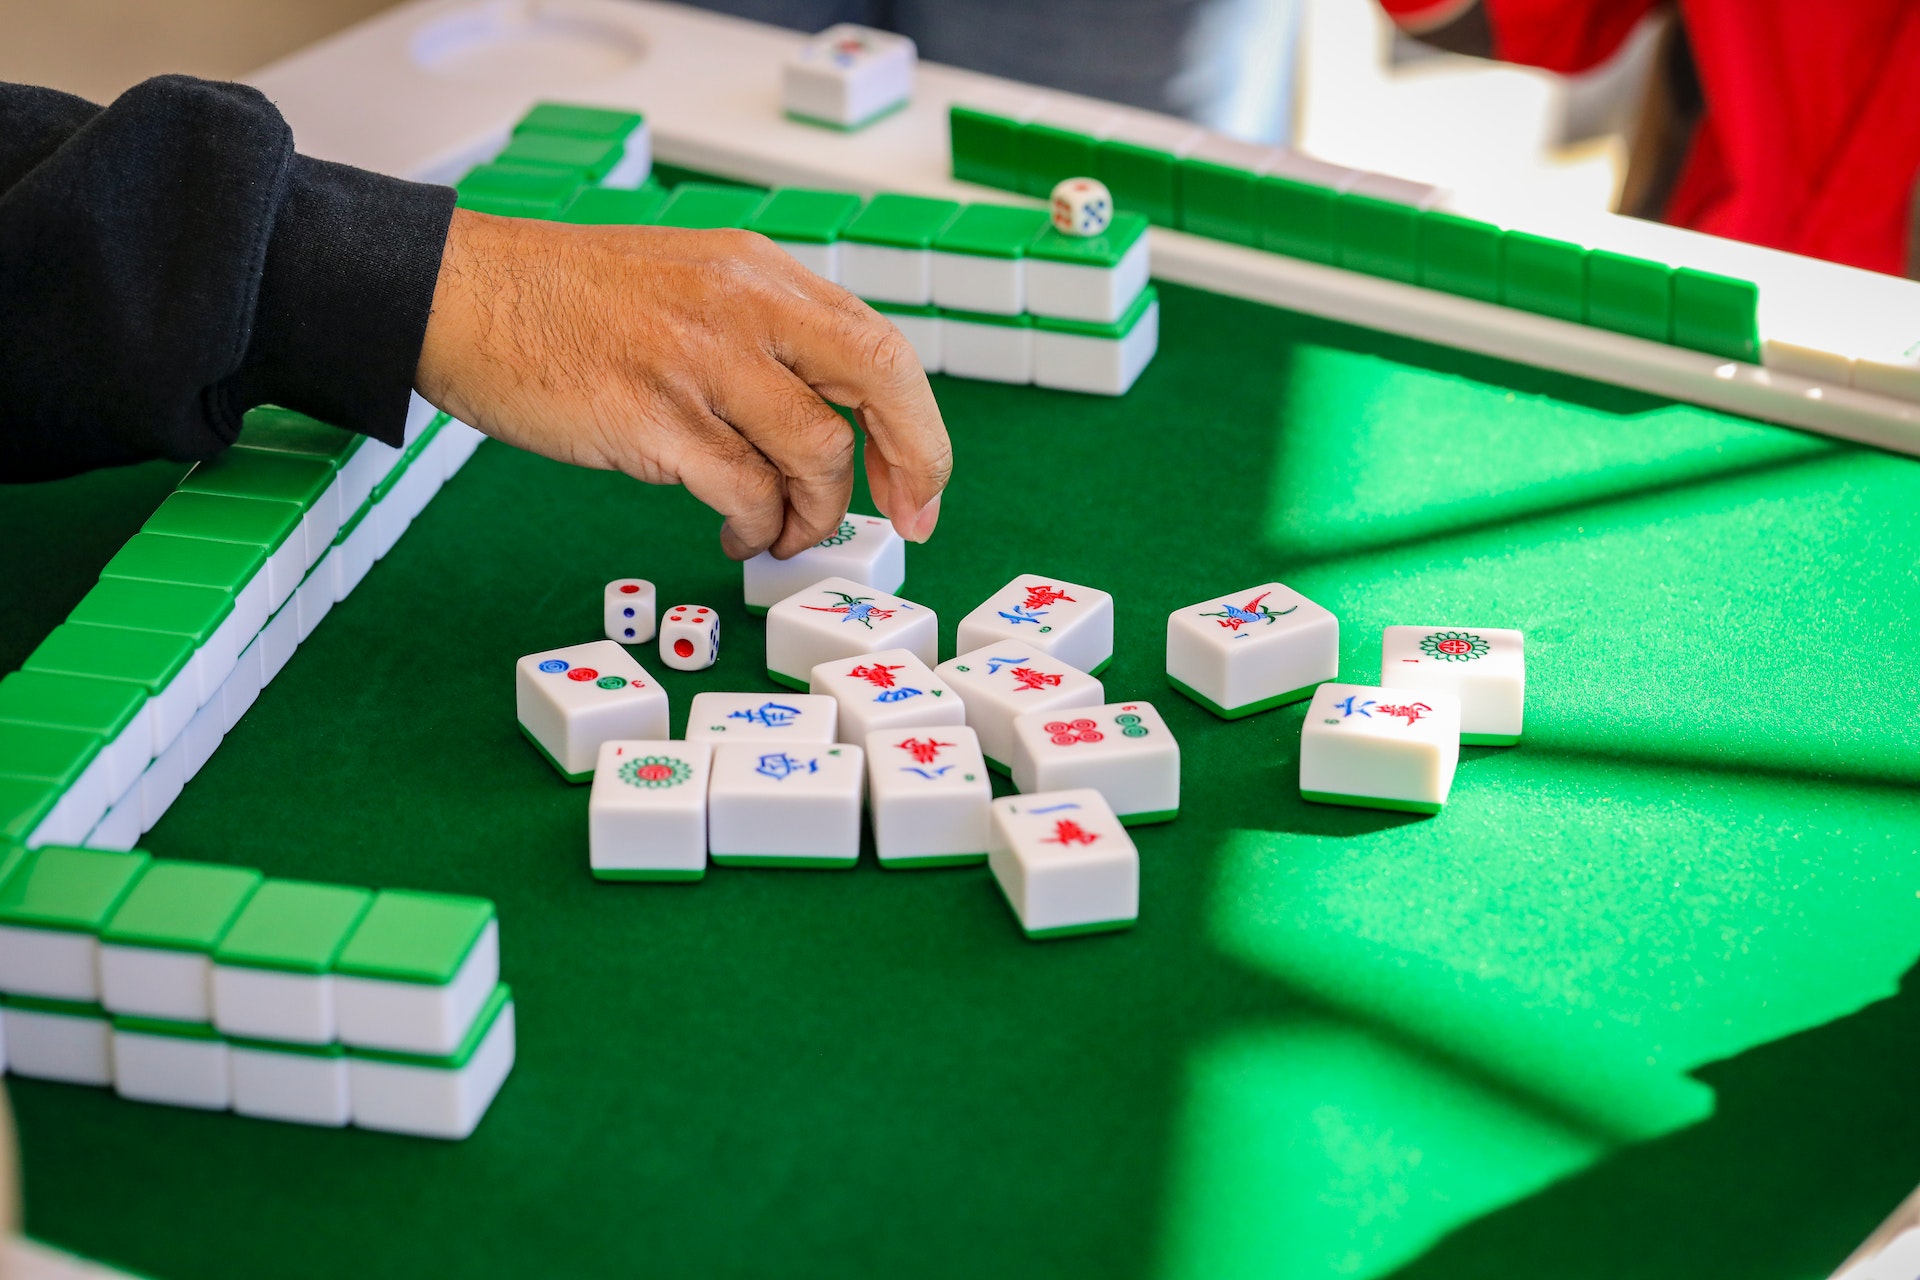 Hey! Play! Chinese Mahjong Game Set